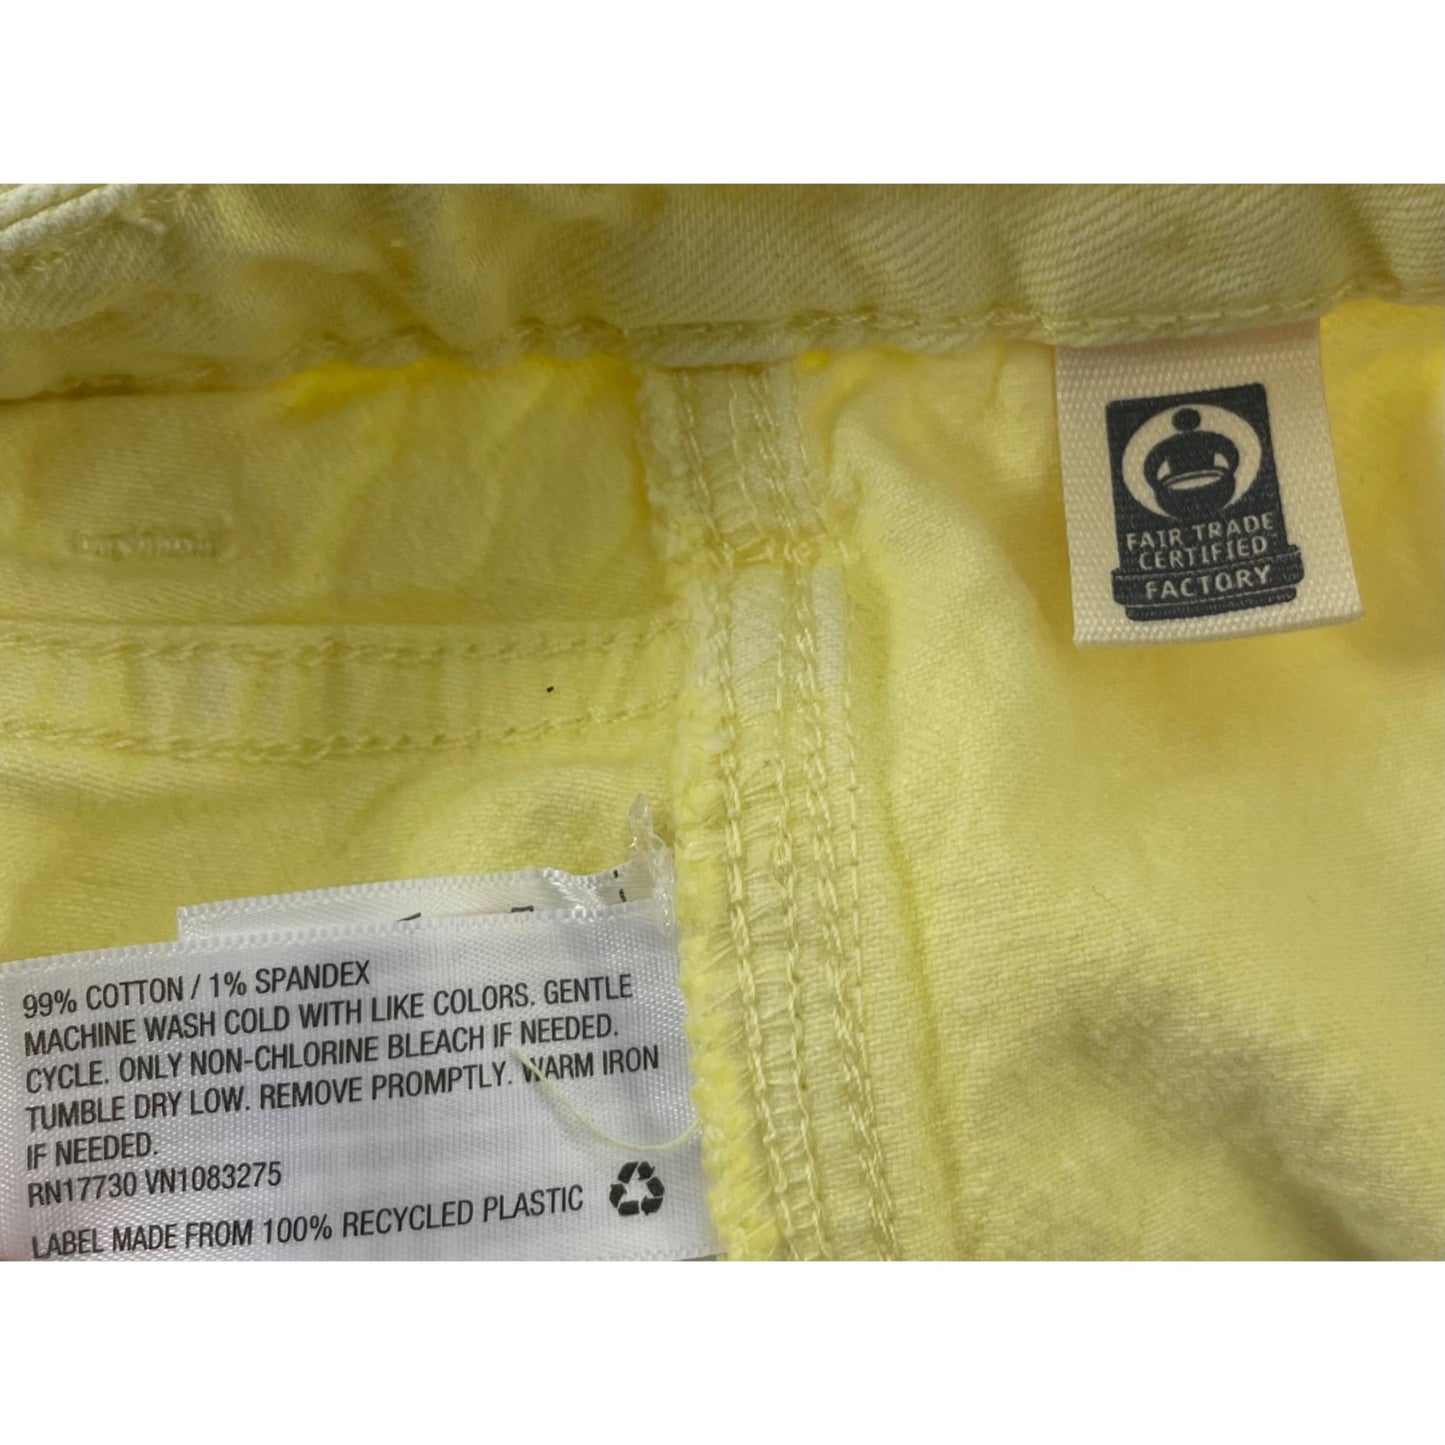 Universal Thread Women's Size 4/27 Highest Rise Midi Yellow Denim Cargo Shorts